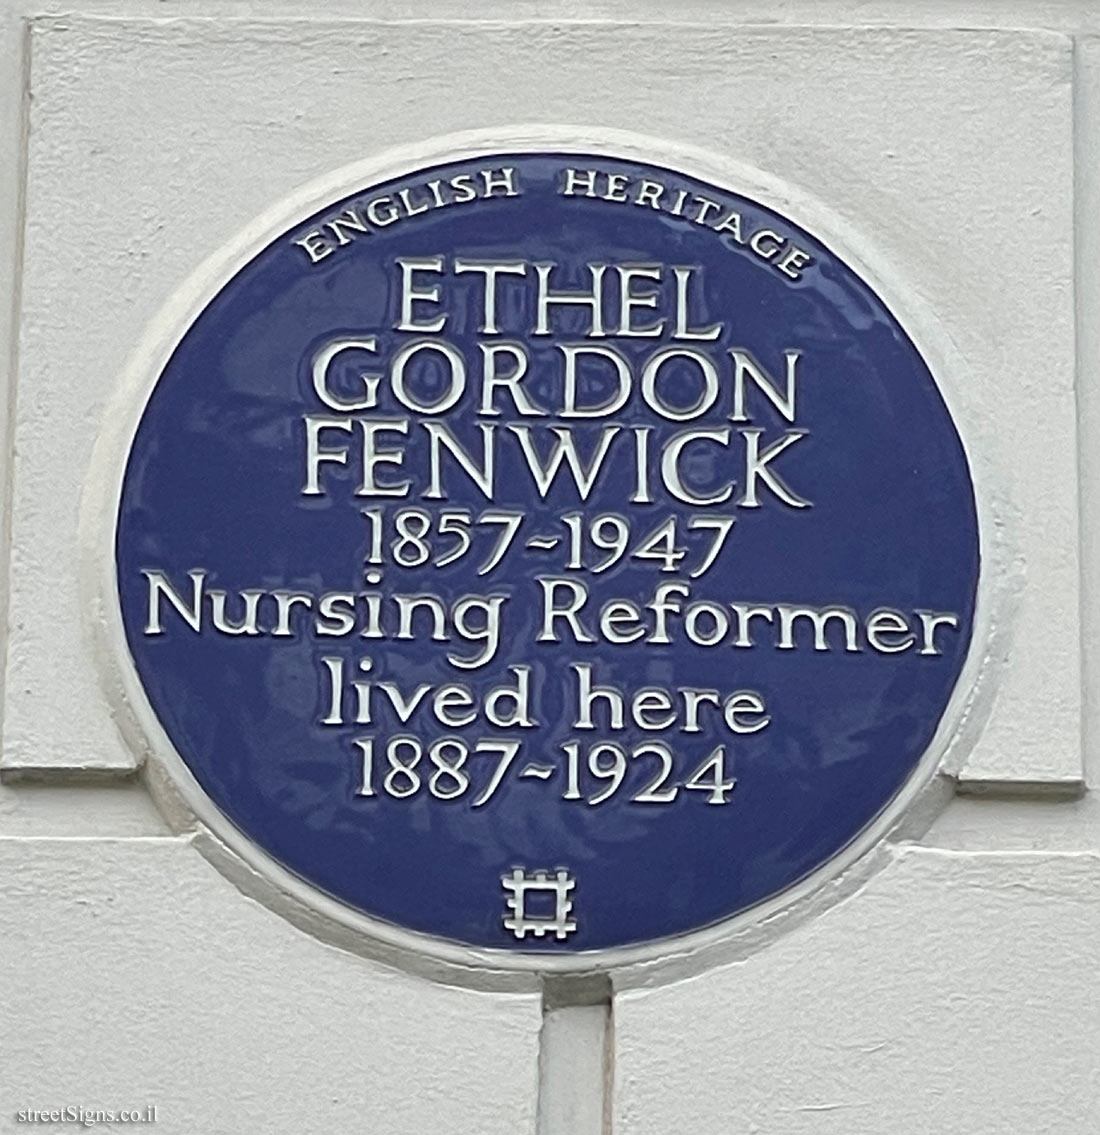 London - English Heritage - The House of Ethel Gordon Fenwick lived